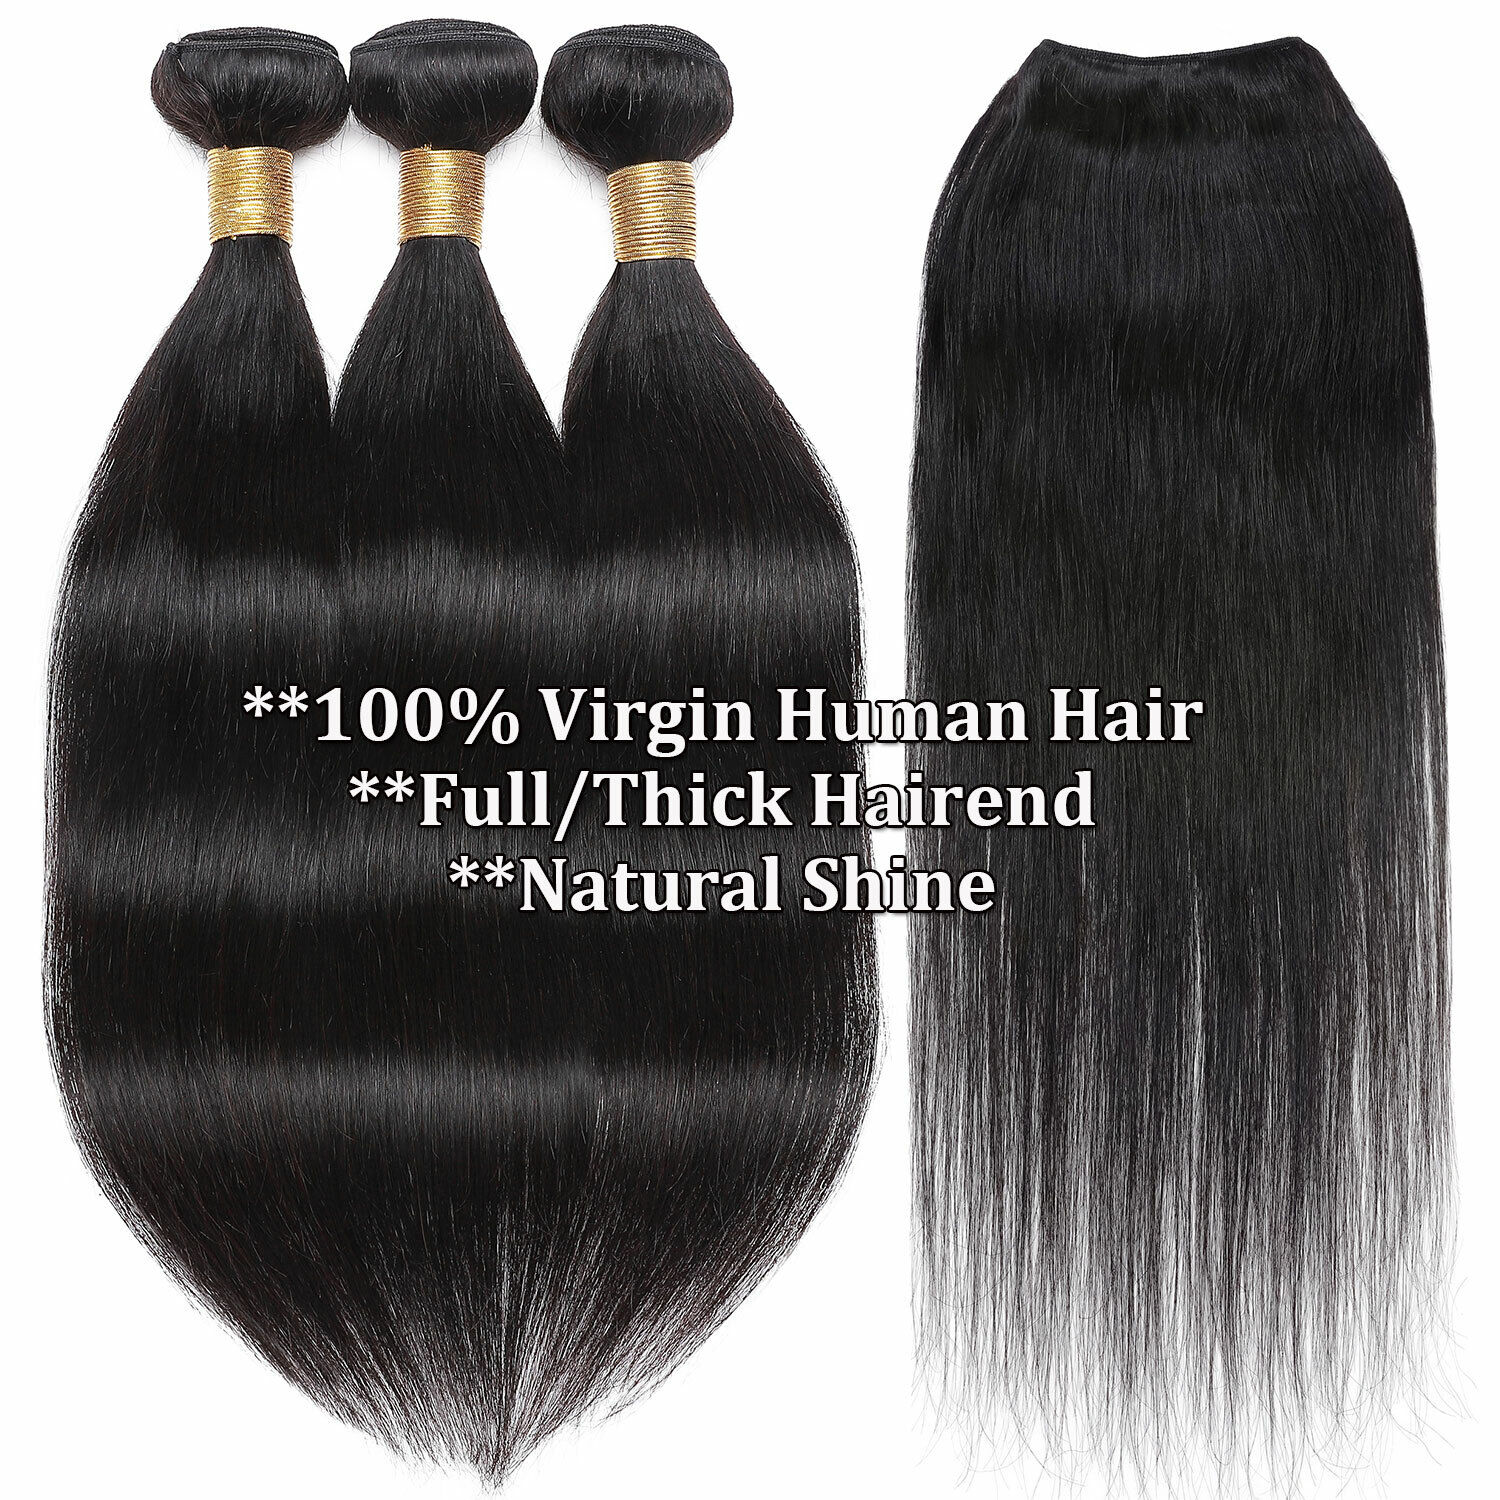 HOT Peruvian Virgin Human Hair Extensions 400G Full Head Bundles Body Wavy Black Ograniczona ilość, bezpłatna wysyłka